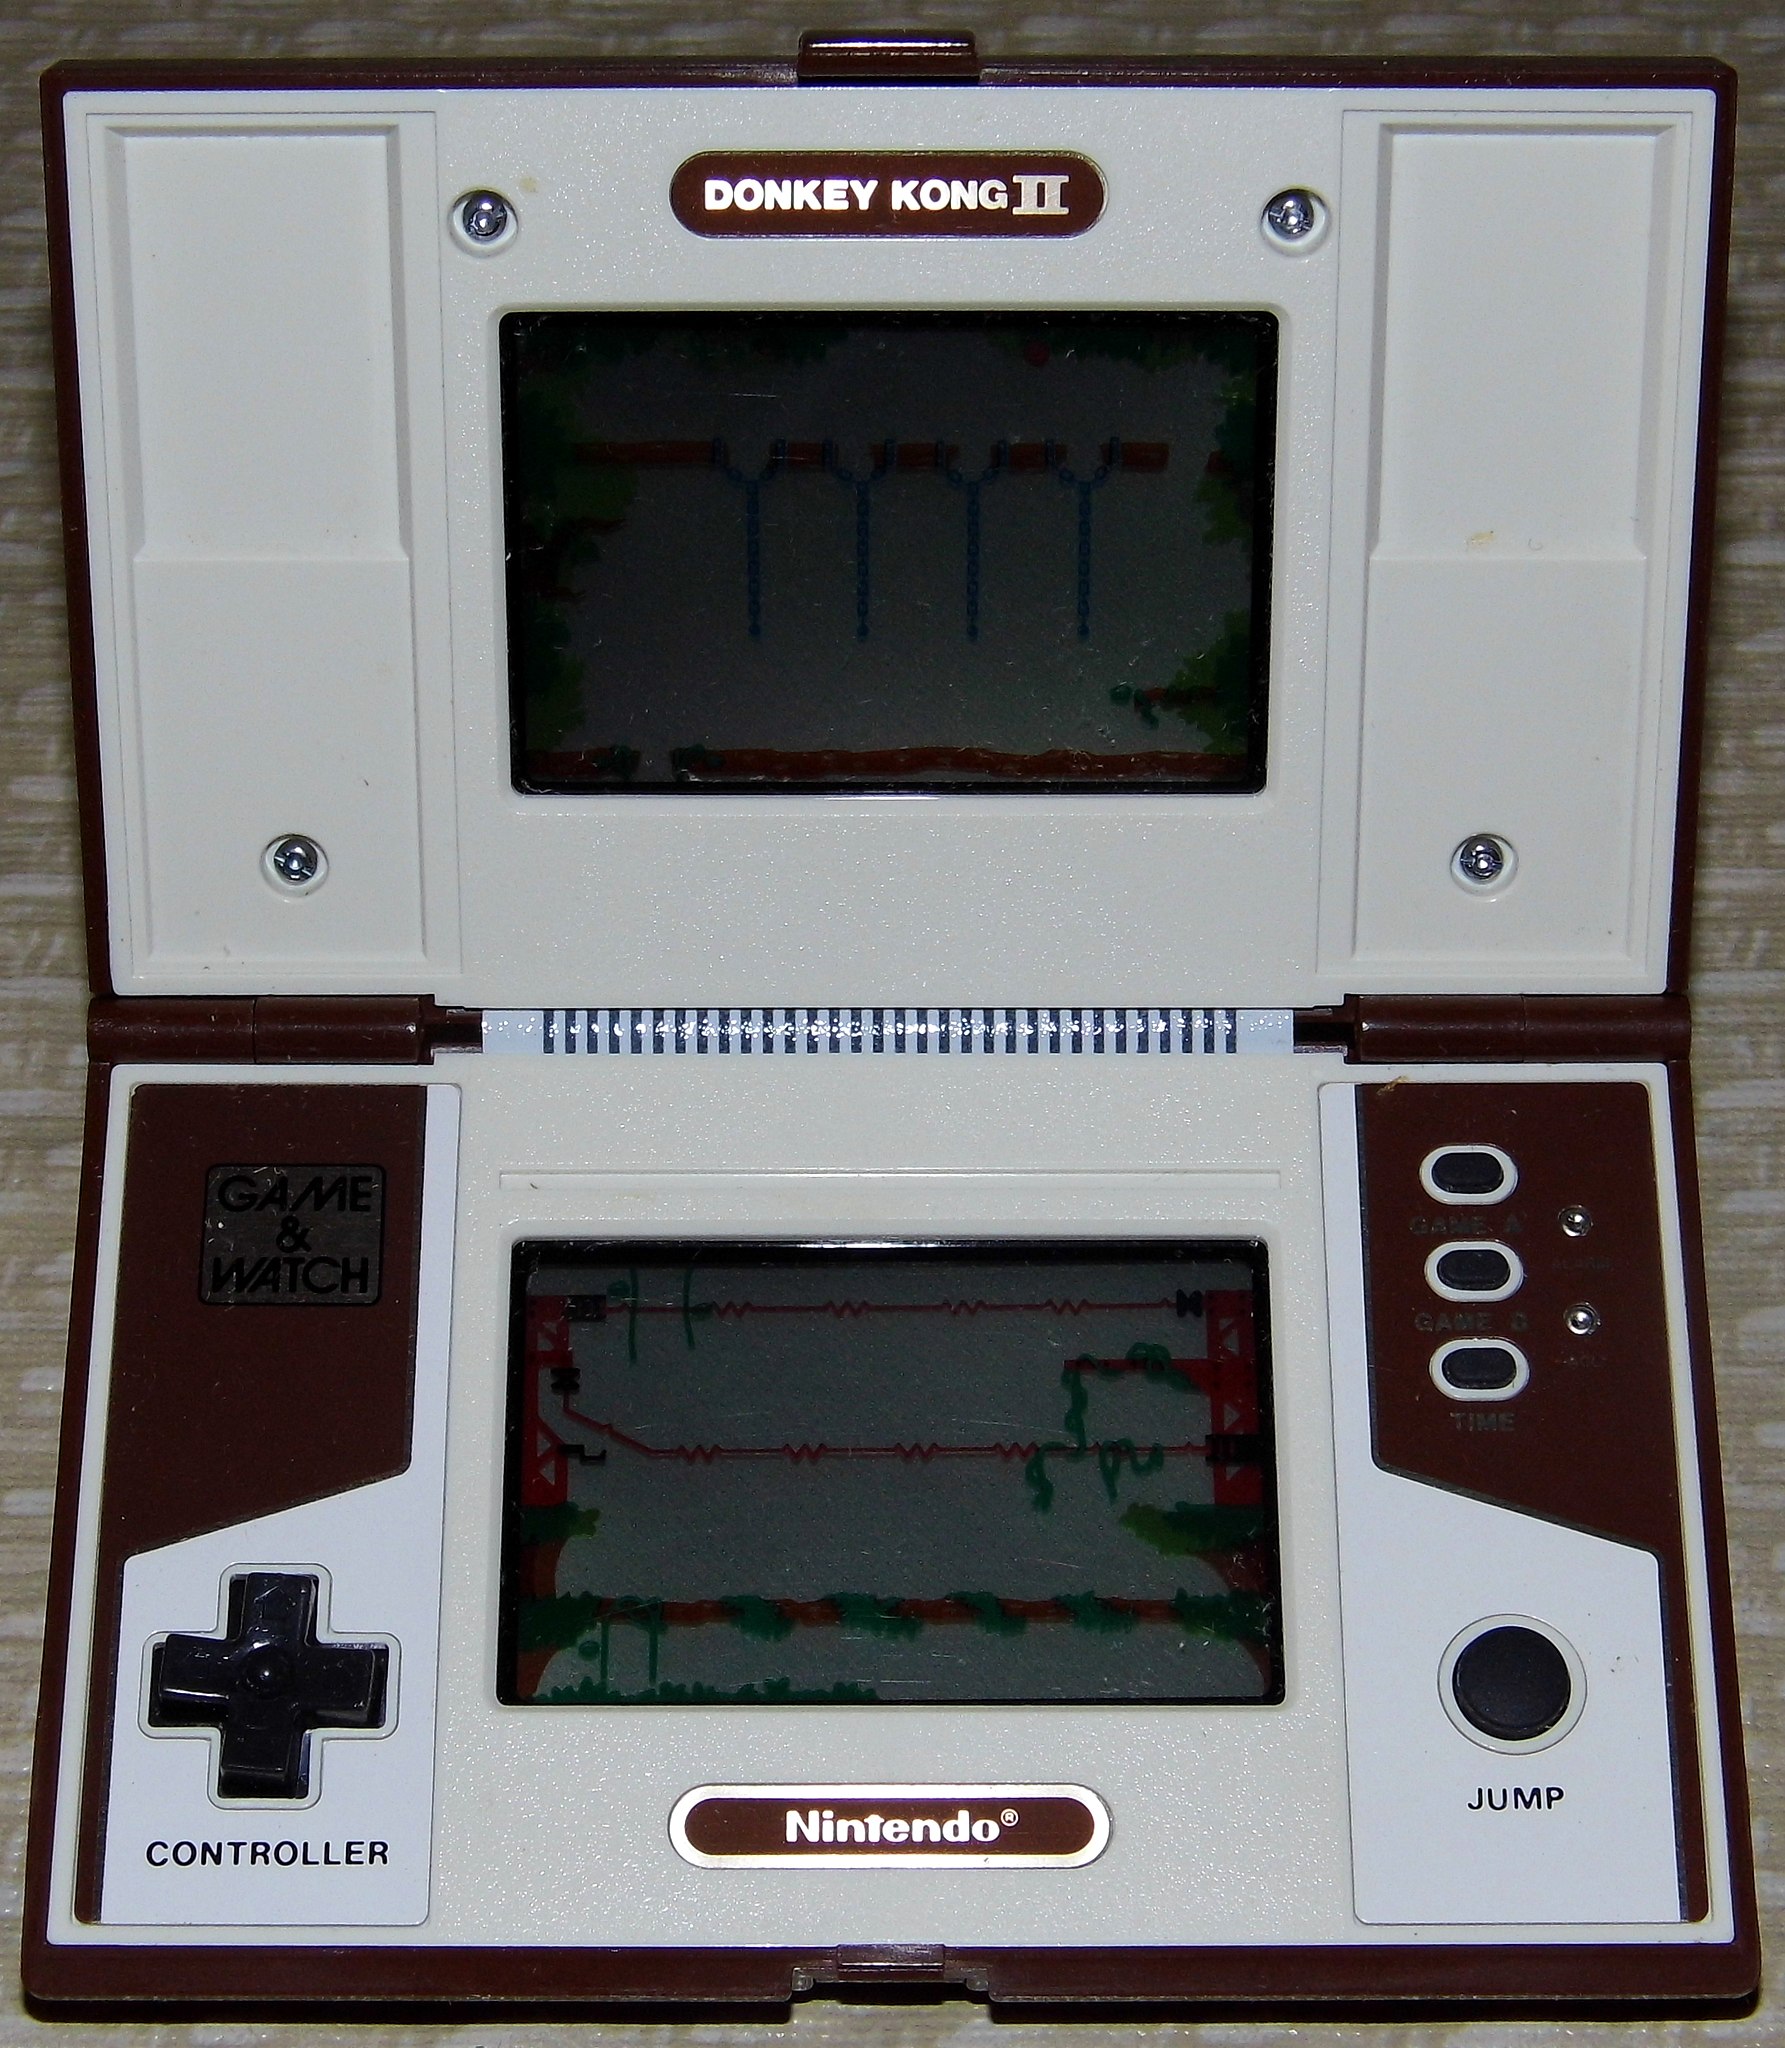 klasse ulovlig tjenestemænd File:Nintendo Donkey Kong II Game & Watch, Model No. JR-55, Made in Japan,  Copyright 1983 (Handheld Electronic Game).jpg - Wikimedia Commons